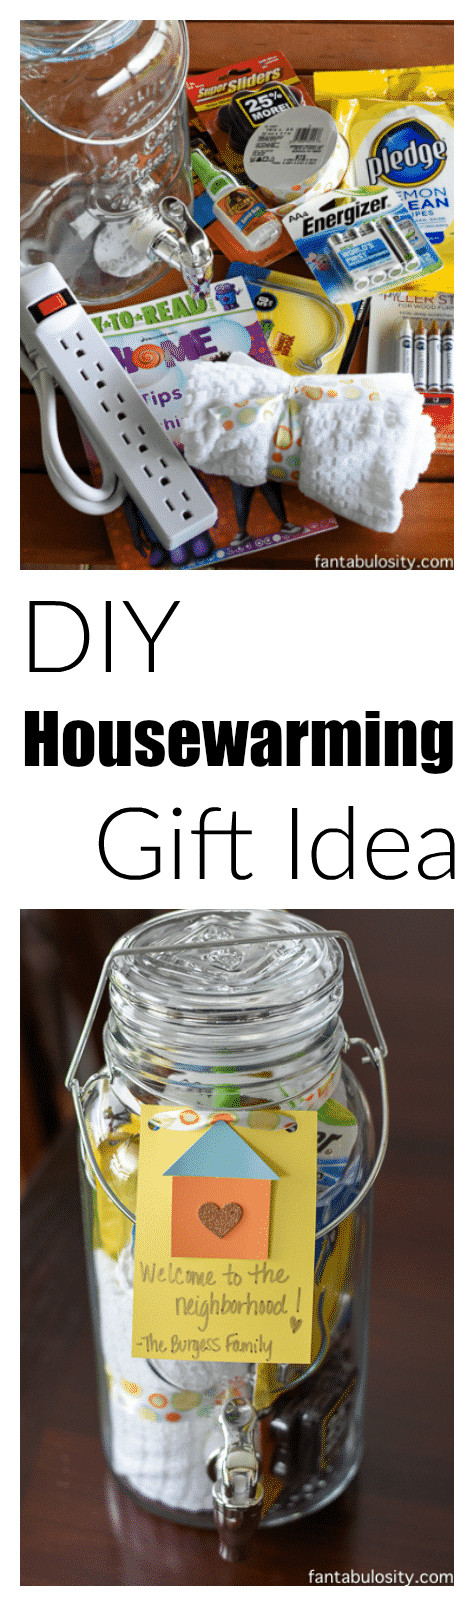 DIY Housewarming Gifts Ideas
 DIY Housewarming Gift Idea Drink Dispenser Fantabulosity